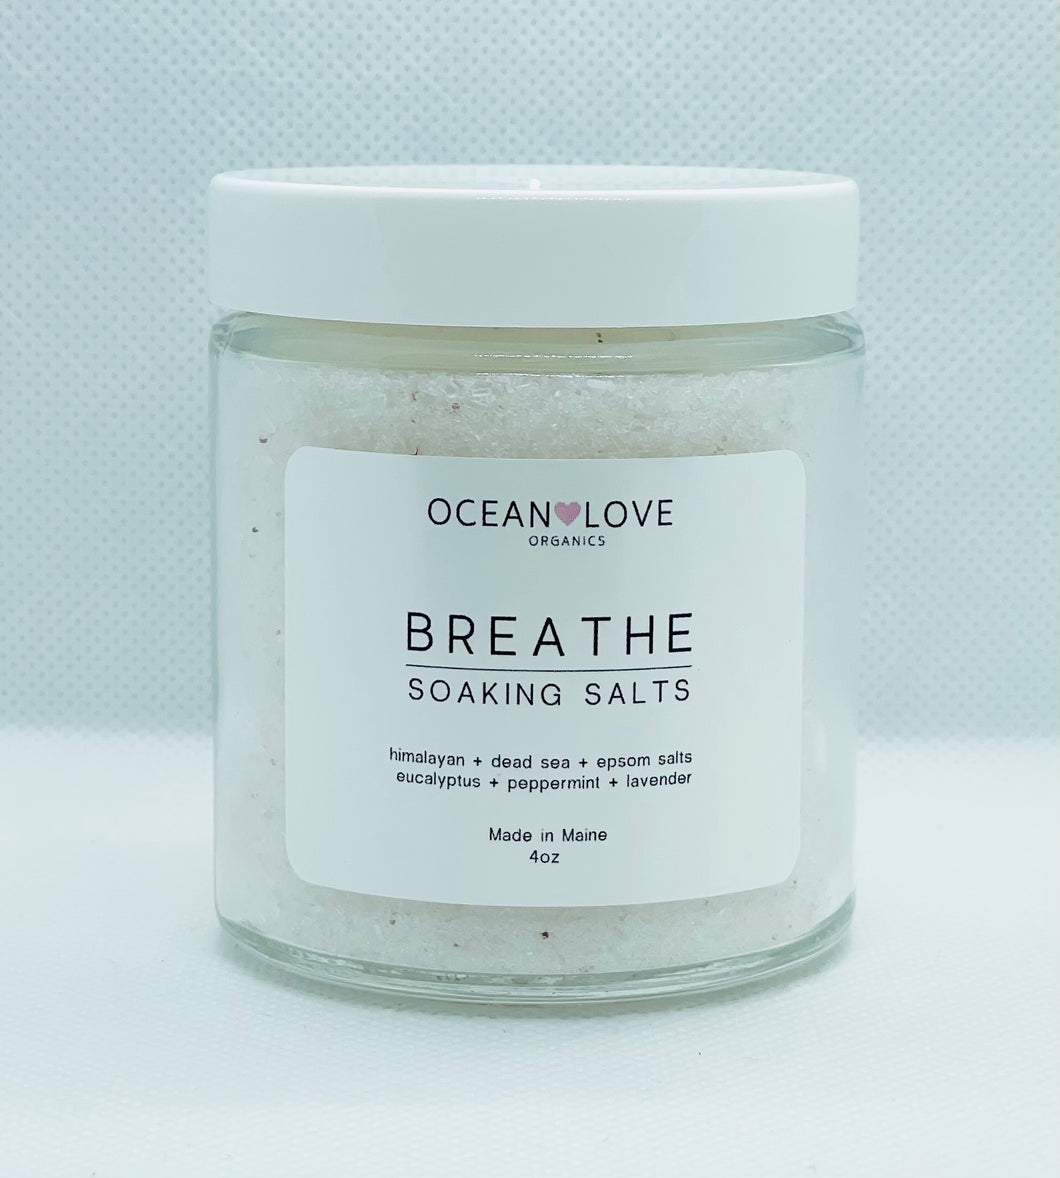 Breathe Soaking Salts